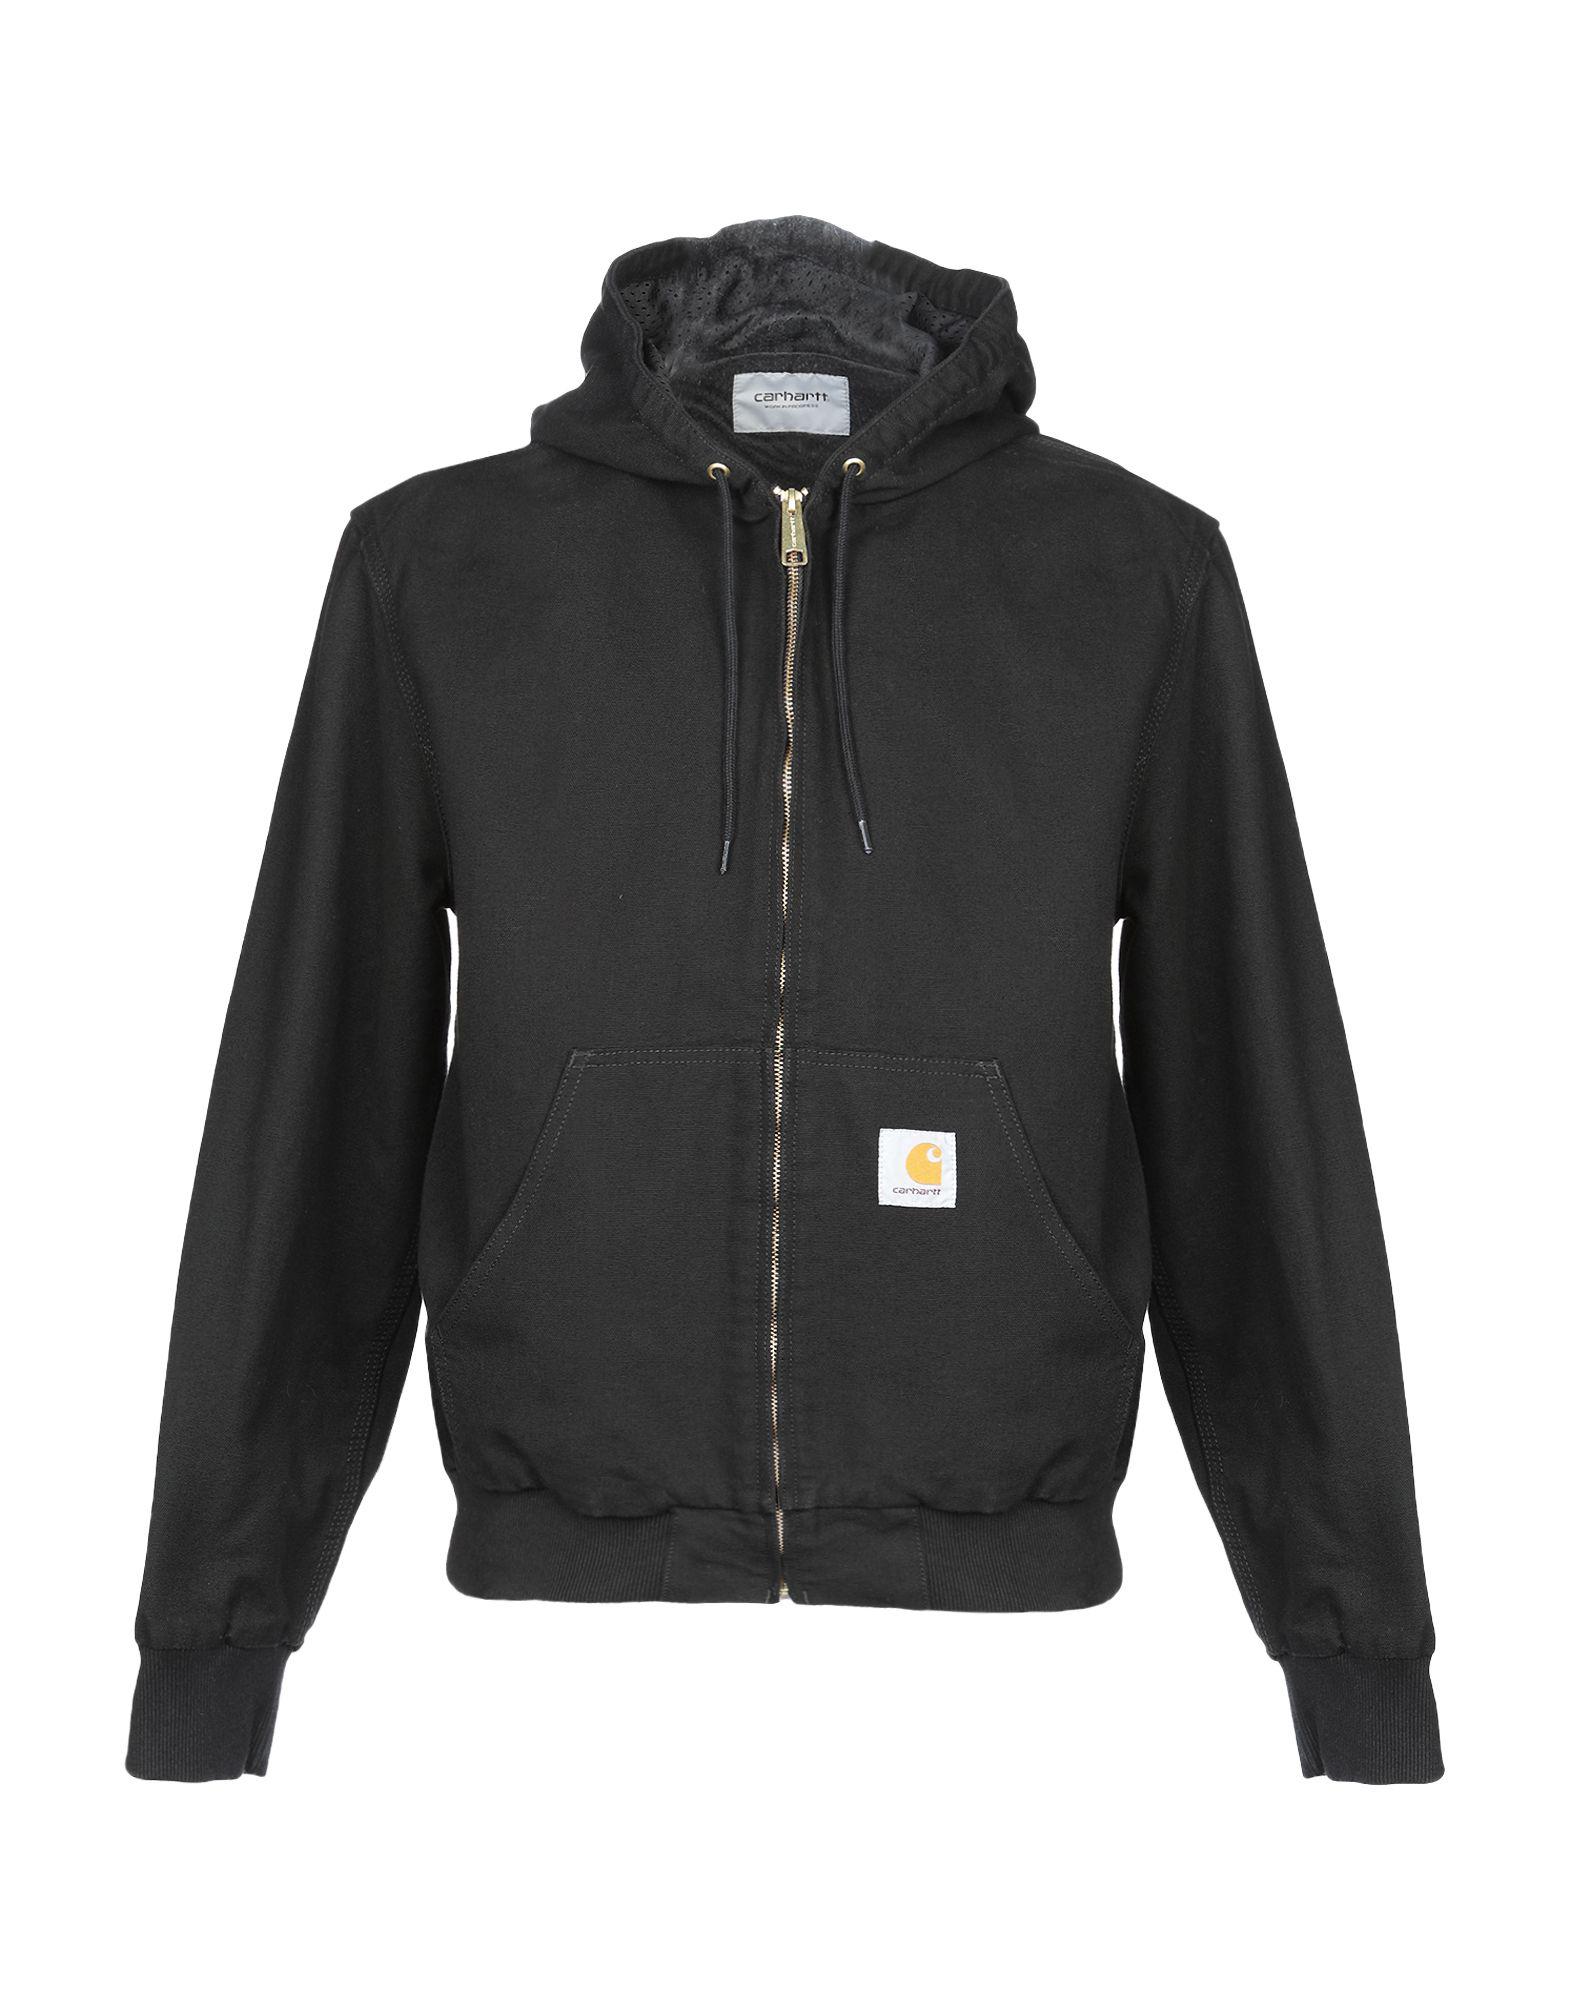 Carhartt Cotton Jacket in Black for Men - Lyst